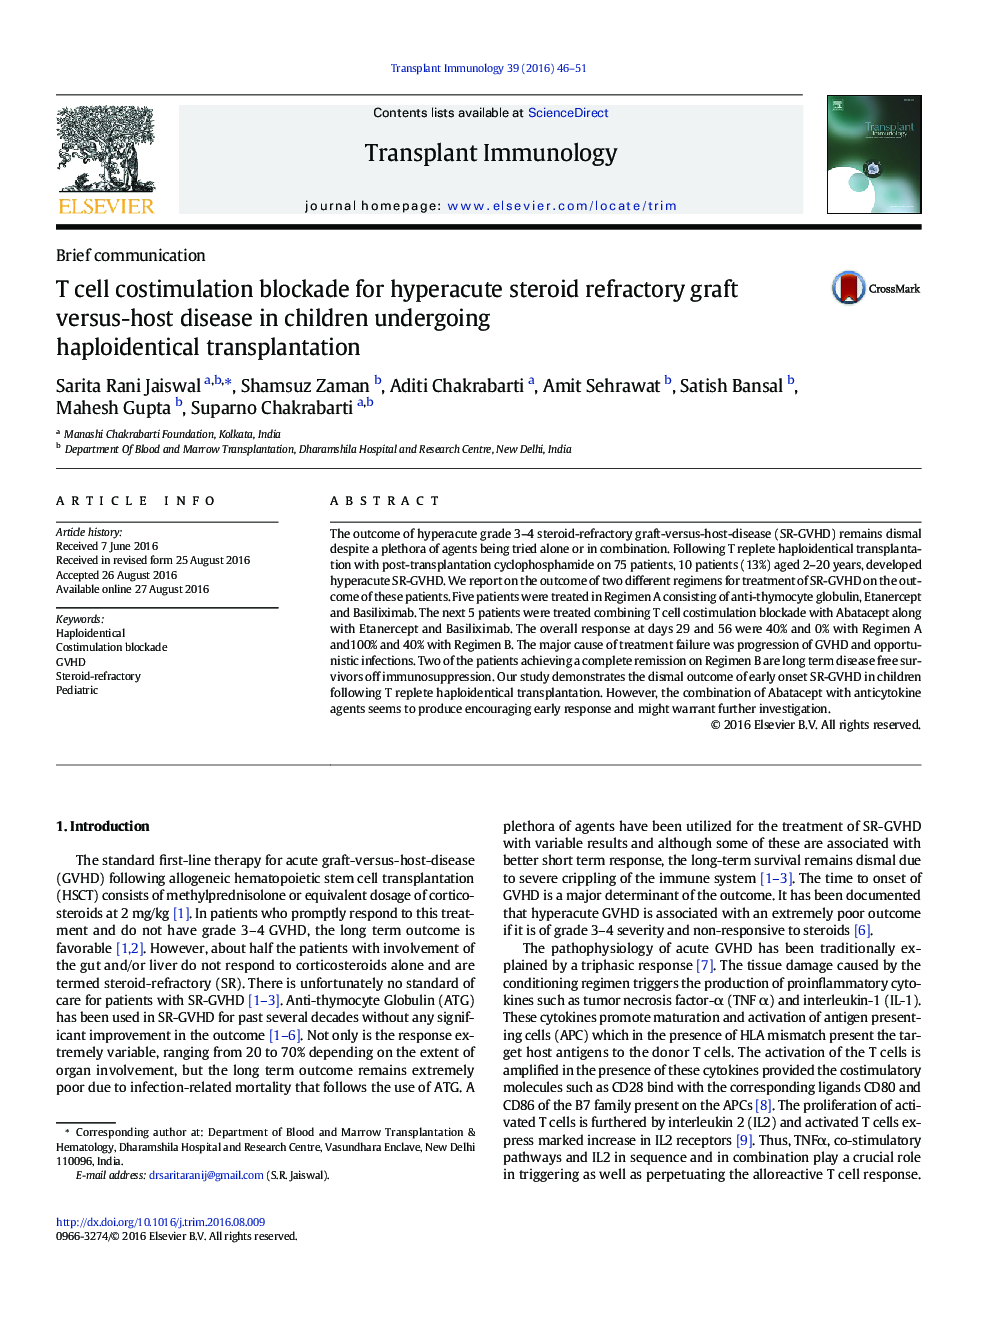 T cell costimulation blockade for hyperacute steroid refractory graft versus-host disease in children undergoing haploidentical transplantation